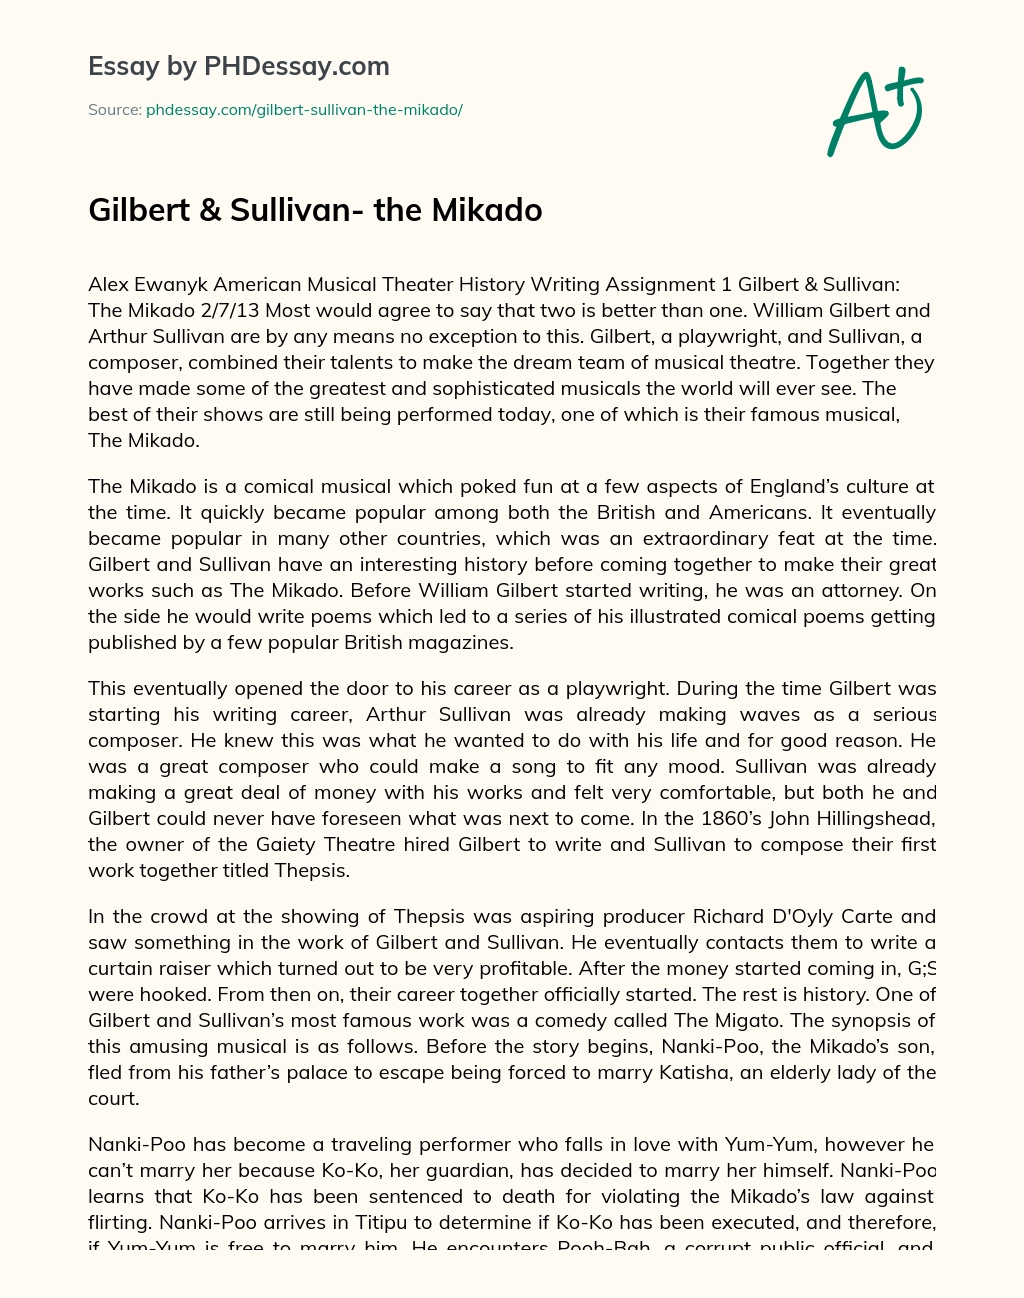 Gilbert & Sullivan- the Mikado essay